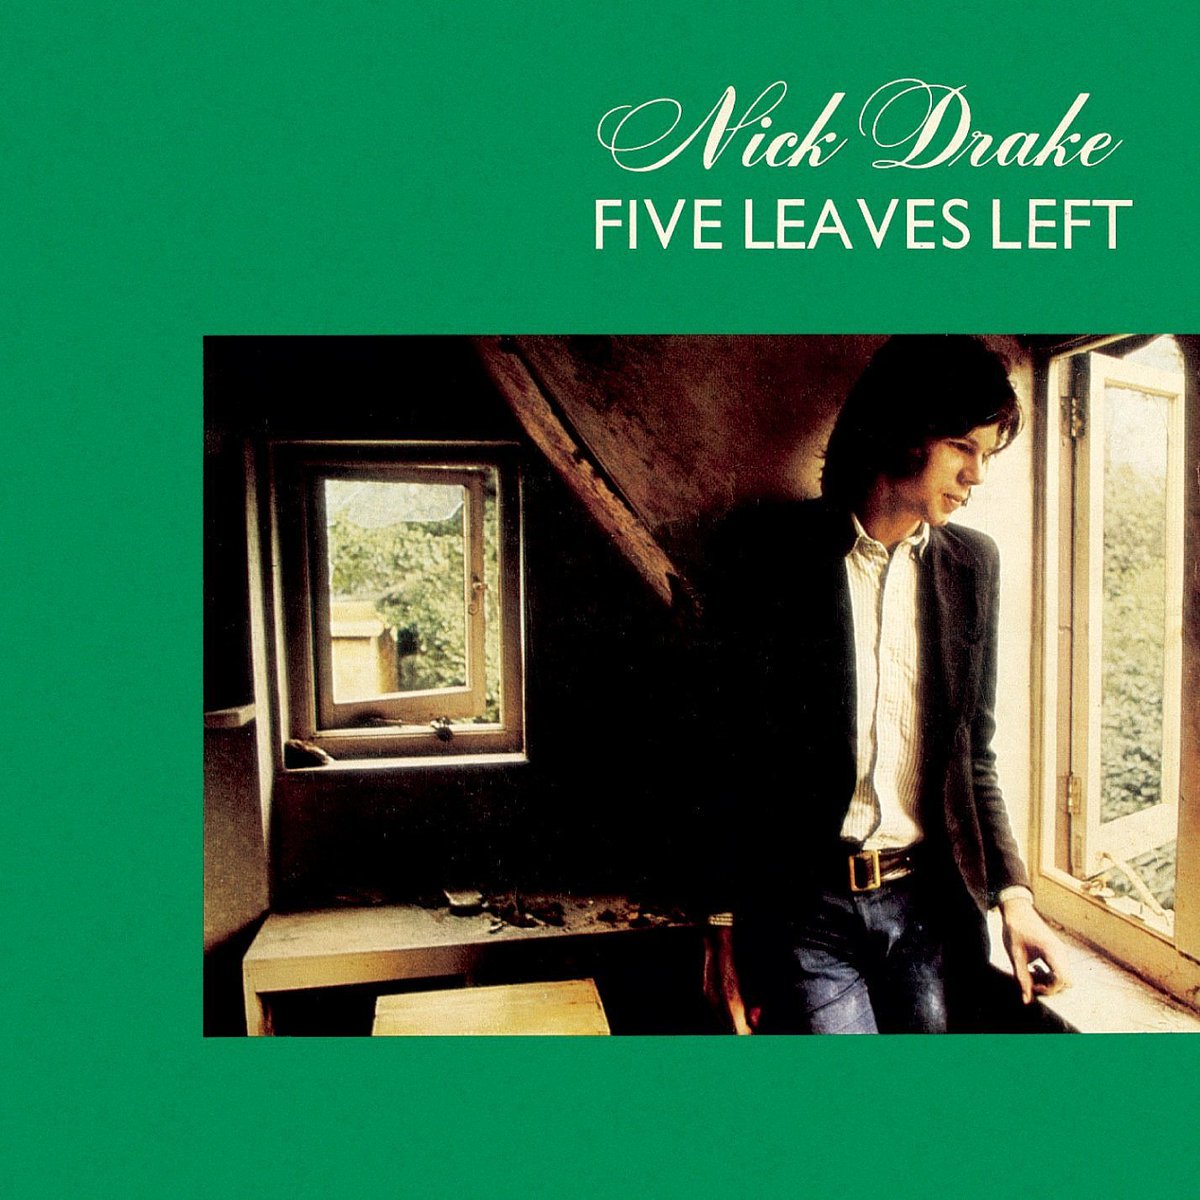 #Portadasdegrandesdiscos ▶️🇲🇲 (🇬🇧🏴󠁧󠁢󠁥󠁮󠁧󠁿) Nick Drake - Five Leaves Left (1969)

#NickDrake #ContemporaryFolk #ChamberFolk #Songwriter #Music #Música

*Nació en Rangún (Myanmar, antigua Birmania), pero es un músico británico.